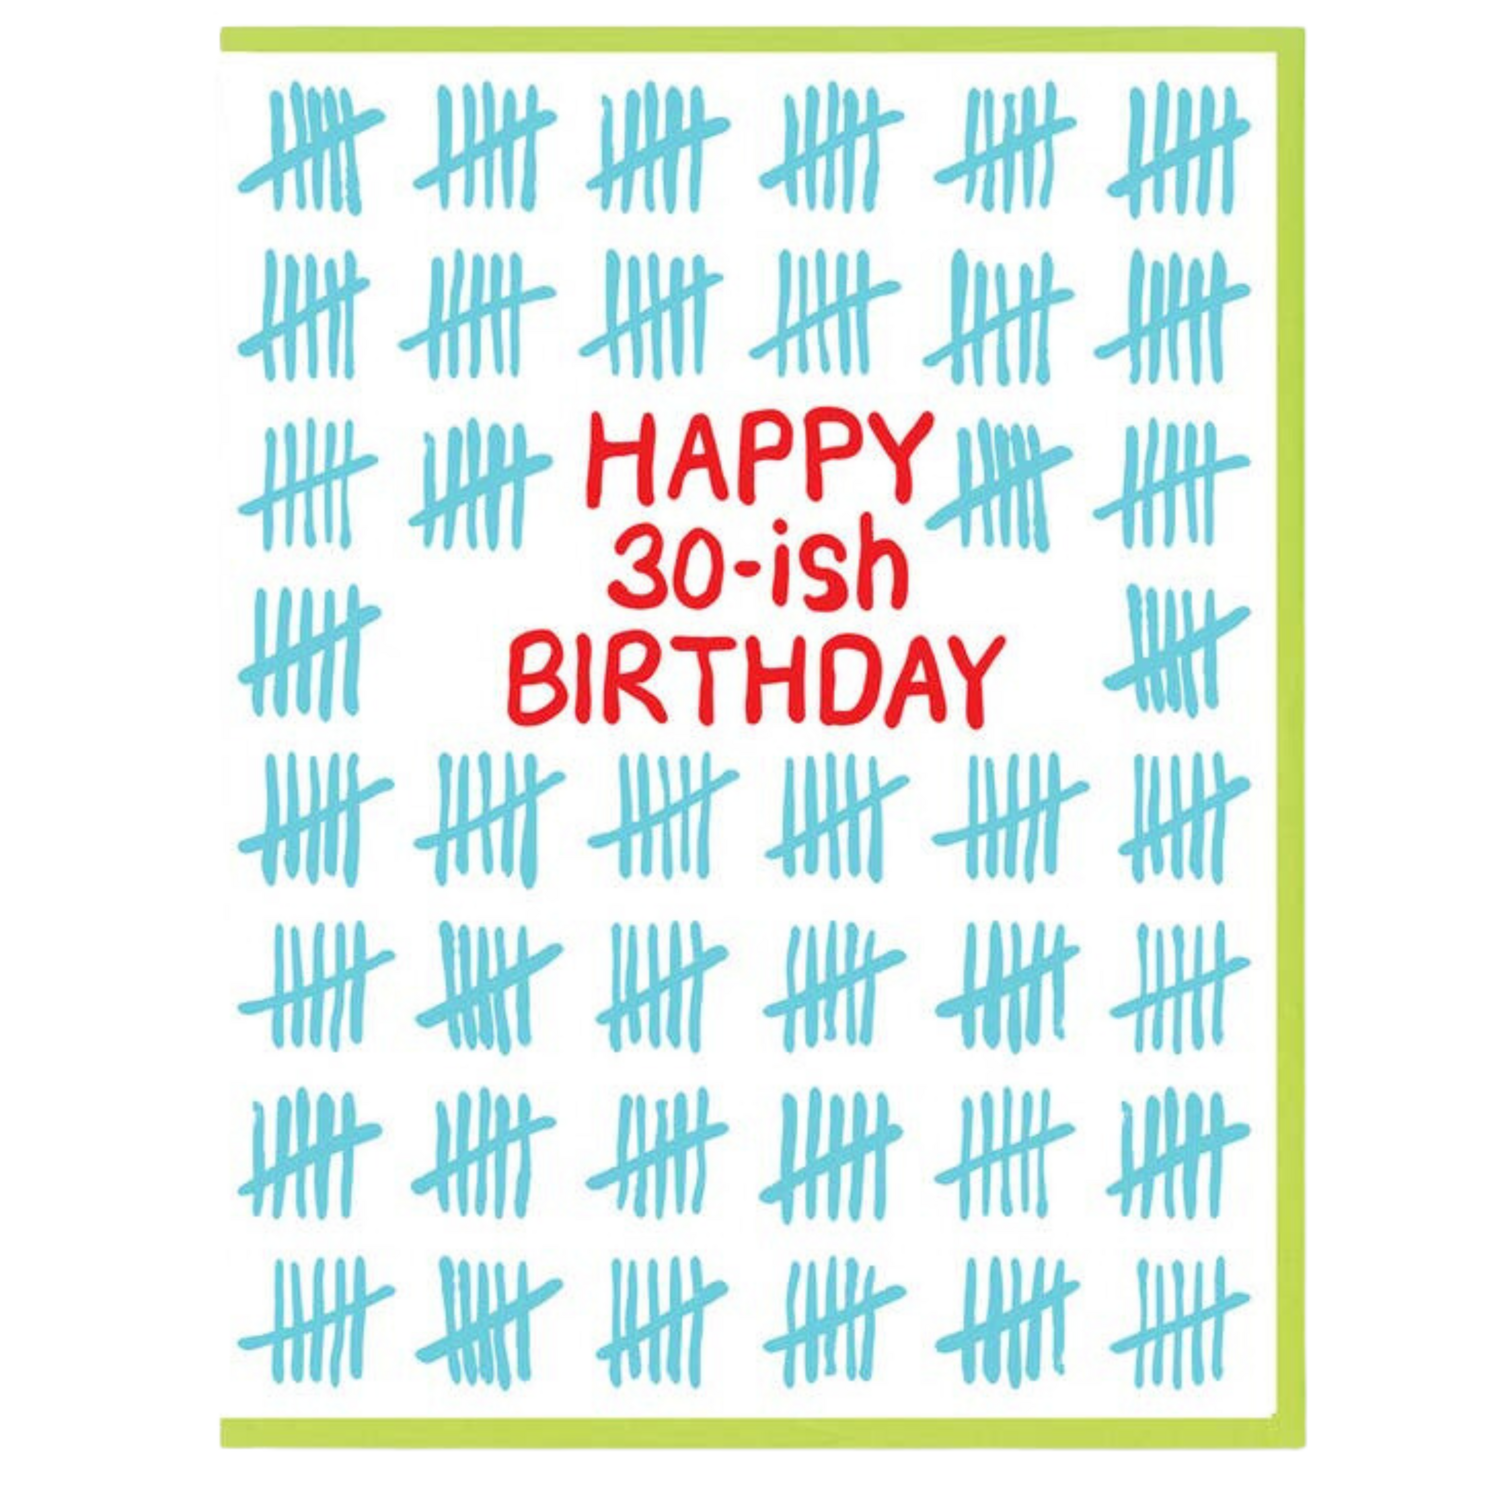 HAPPY 30-ISH BIRTHDAY CARD